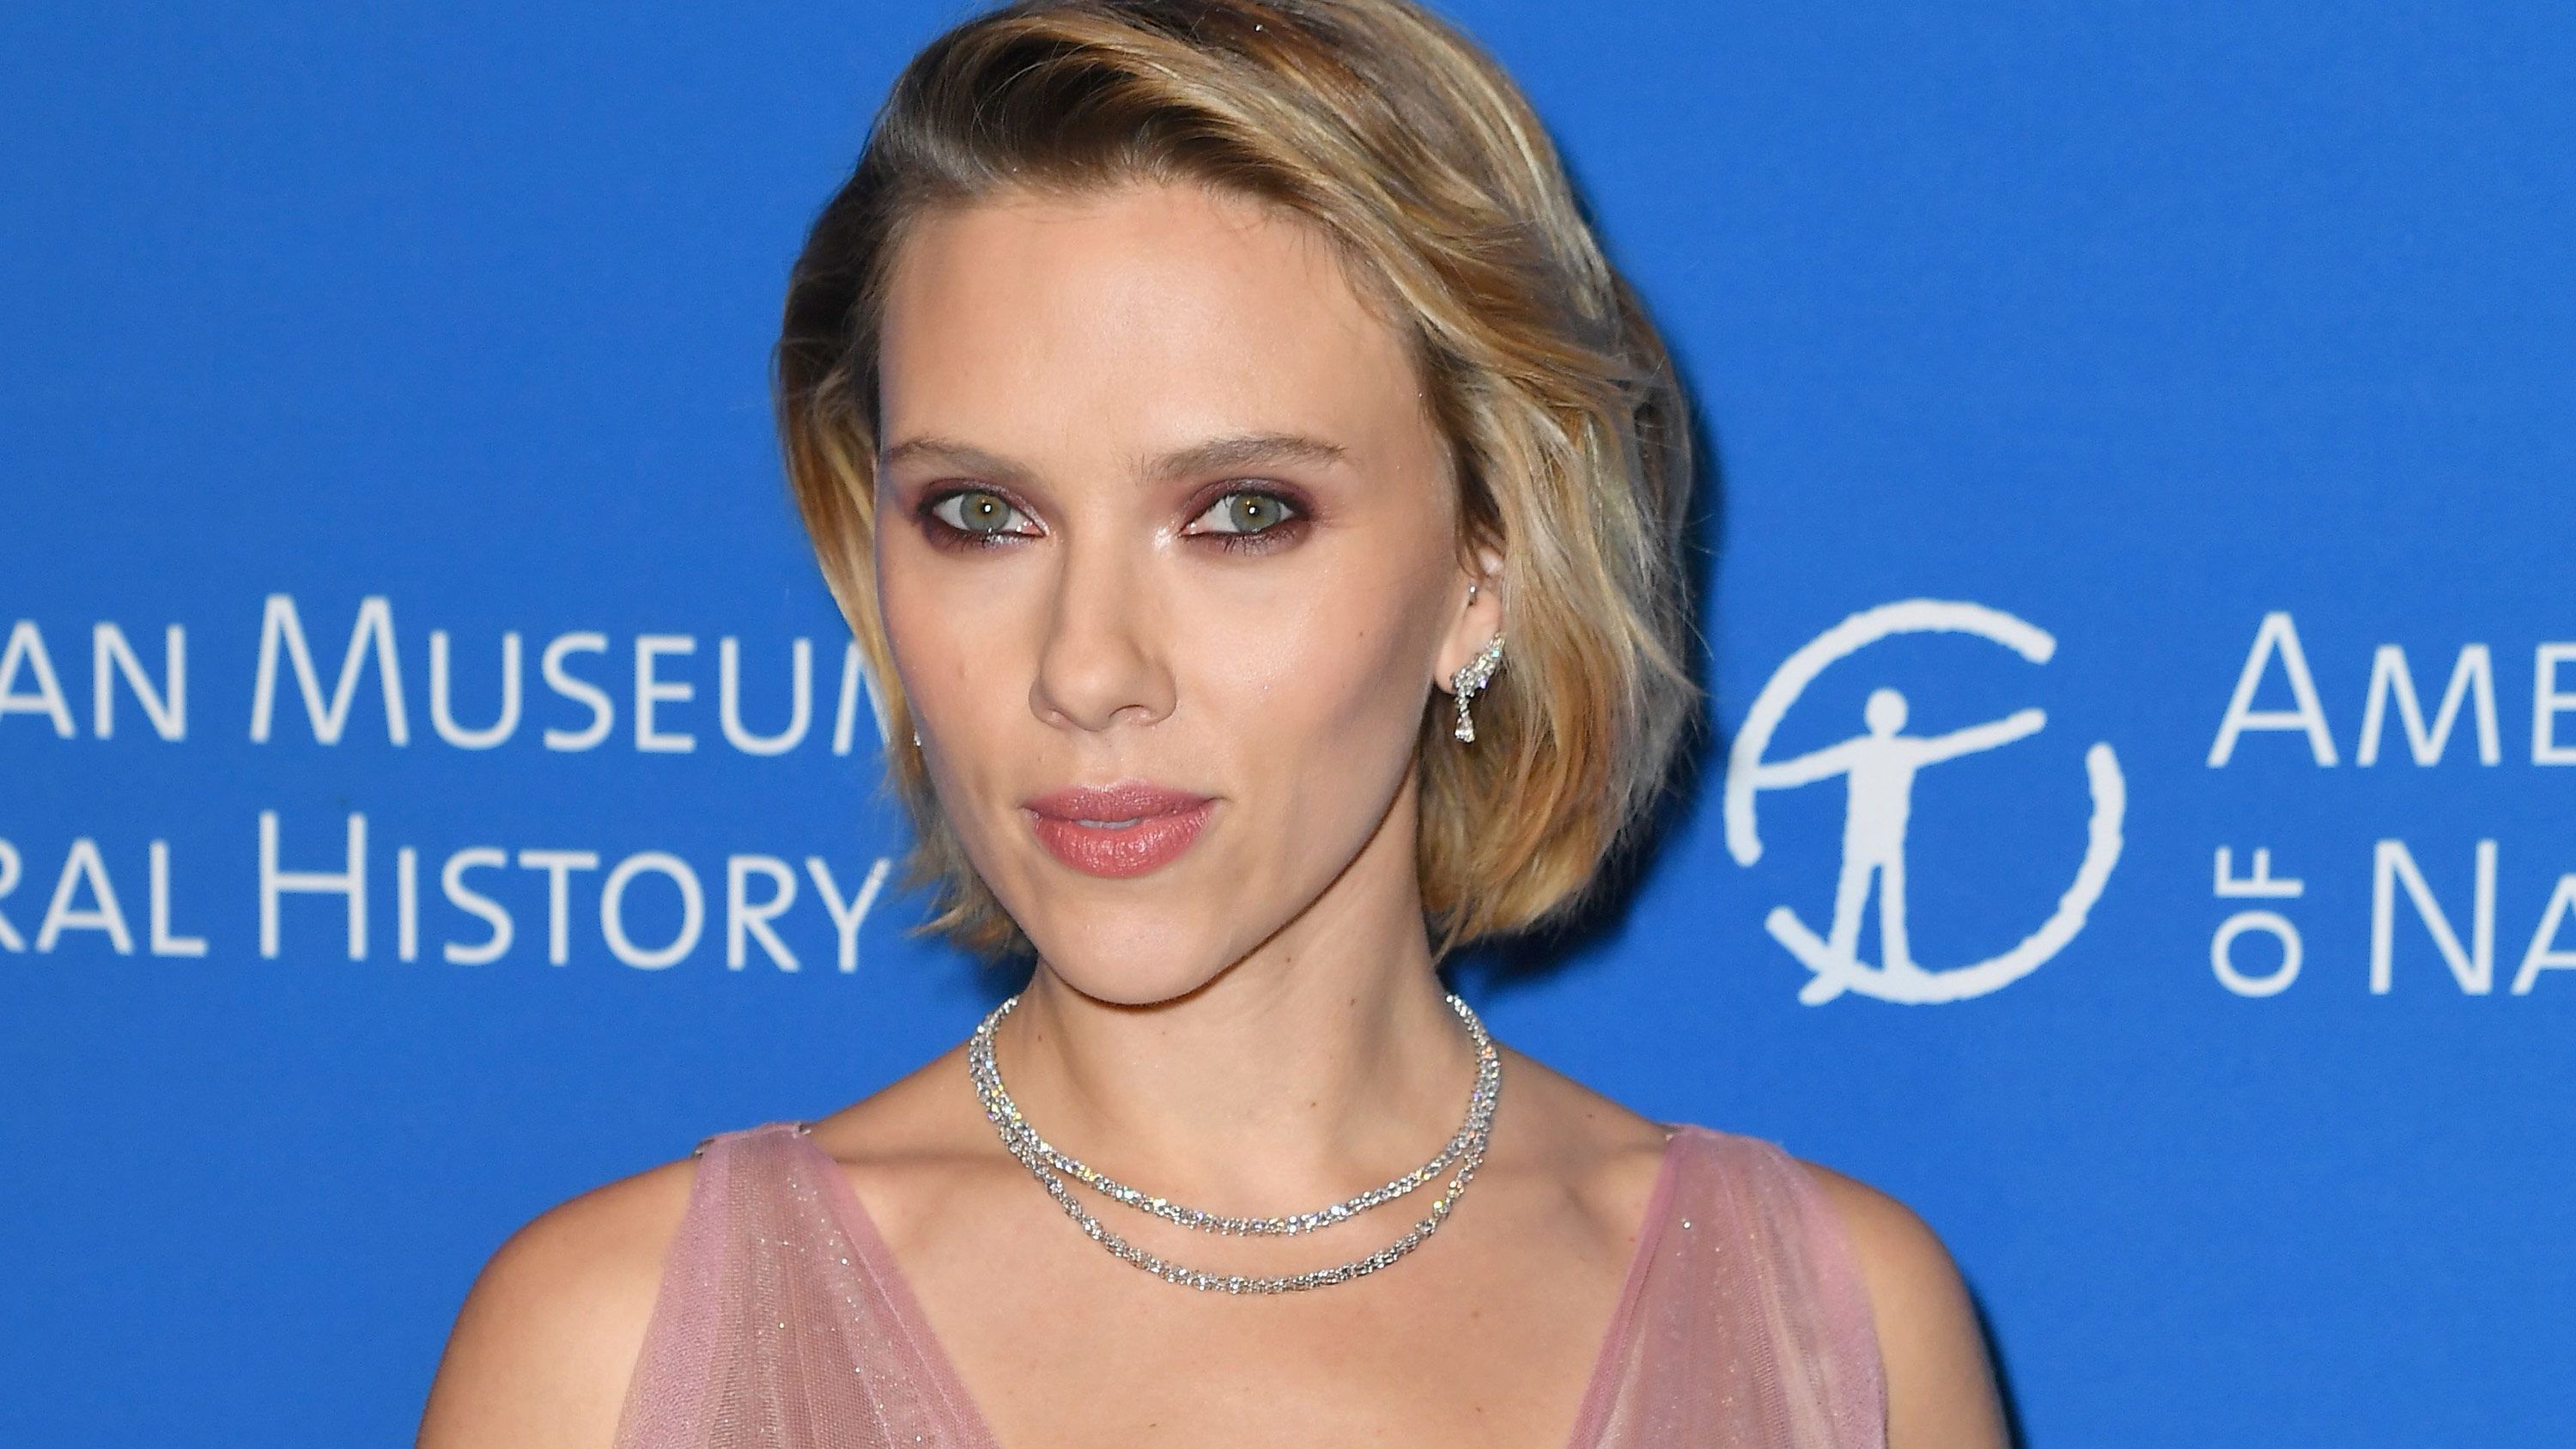 Scarlett Johansson Says Her Political Views Shouldn't Affect Her Job